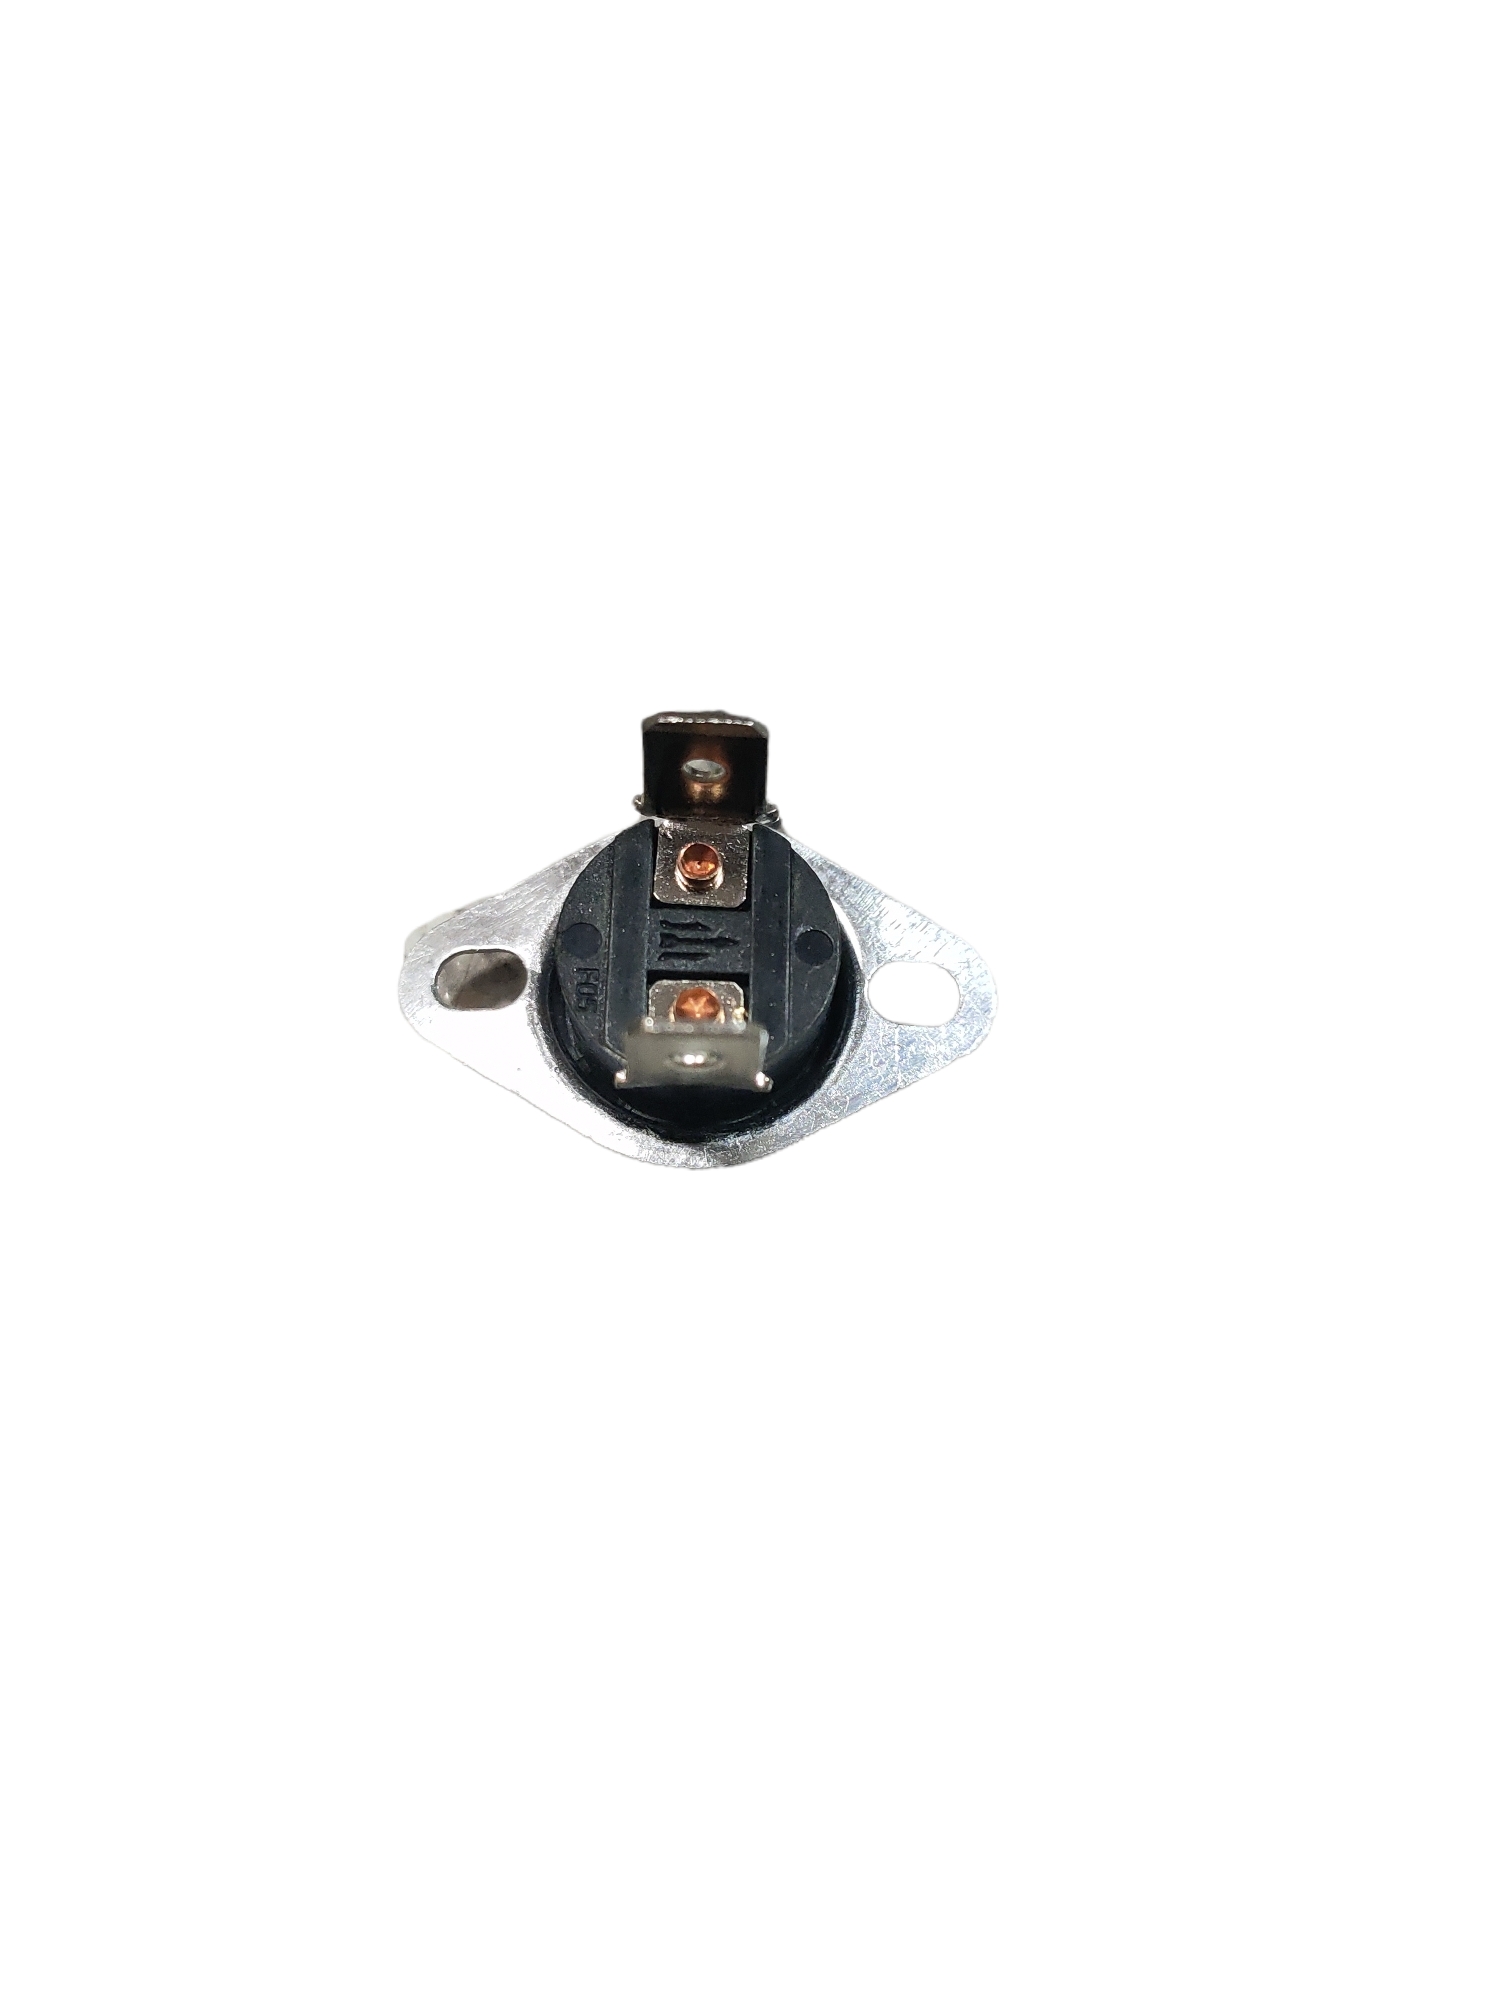 Interruptor Redondo Luminoso Radiador Aceite Rw Mini